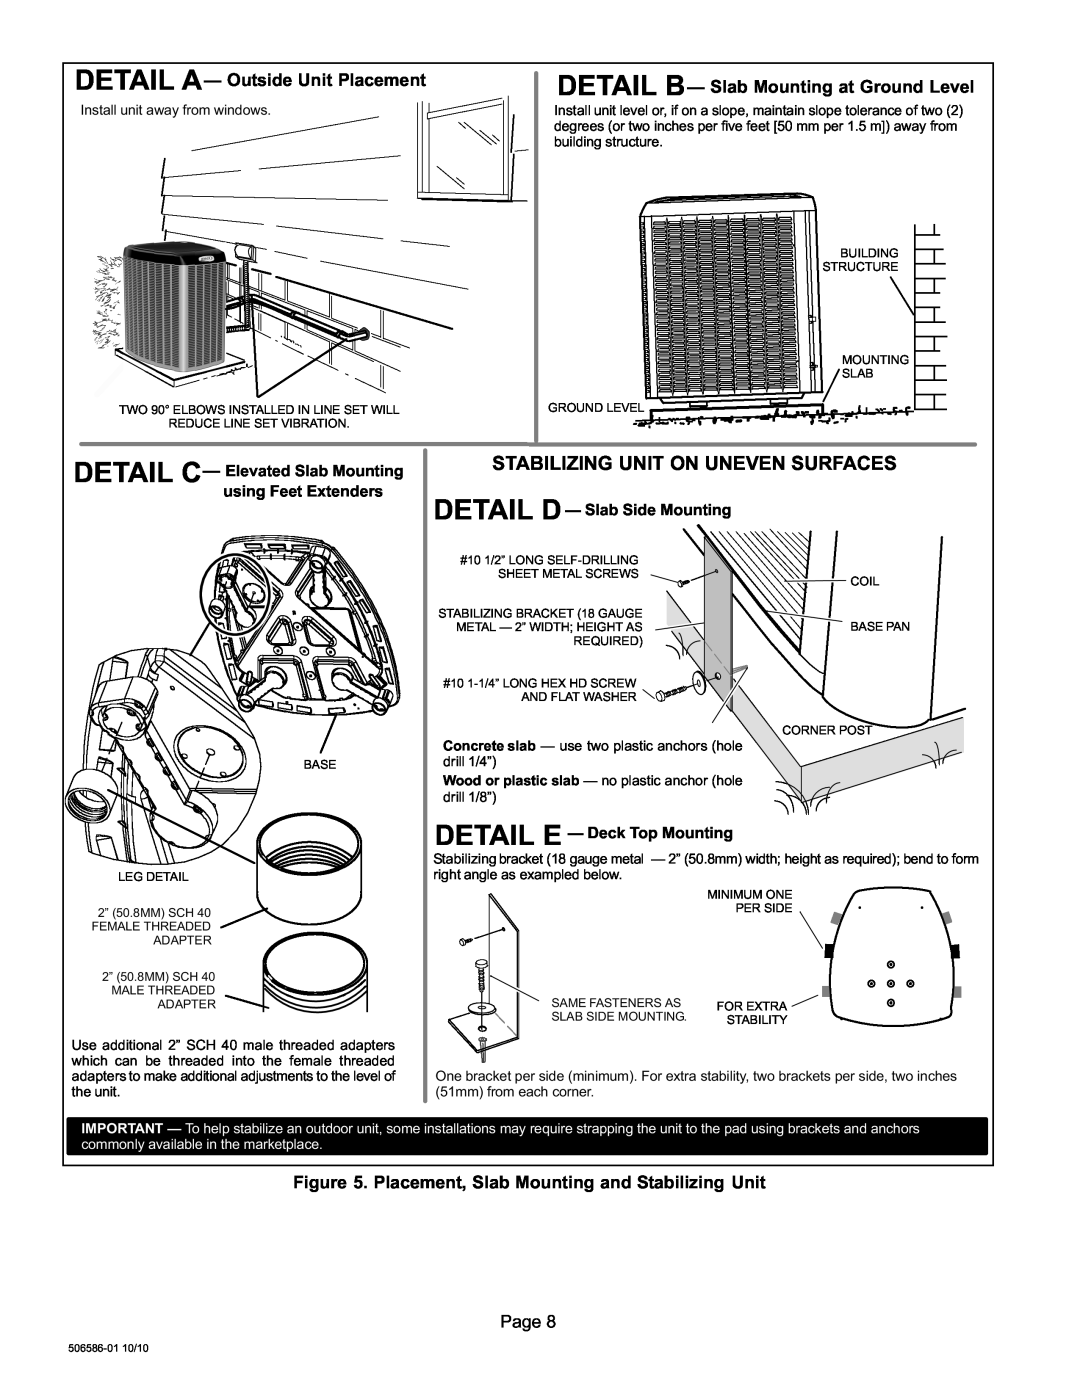 Lennox International Inc 506586-01 Detail B, Stabilizing Unit On Uneven Surfaces, DETAIL D Slab Side Mounting 